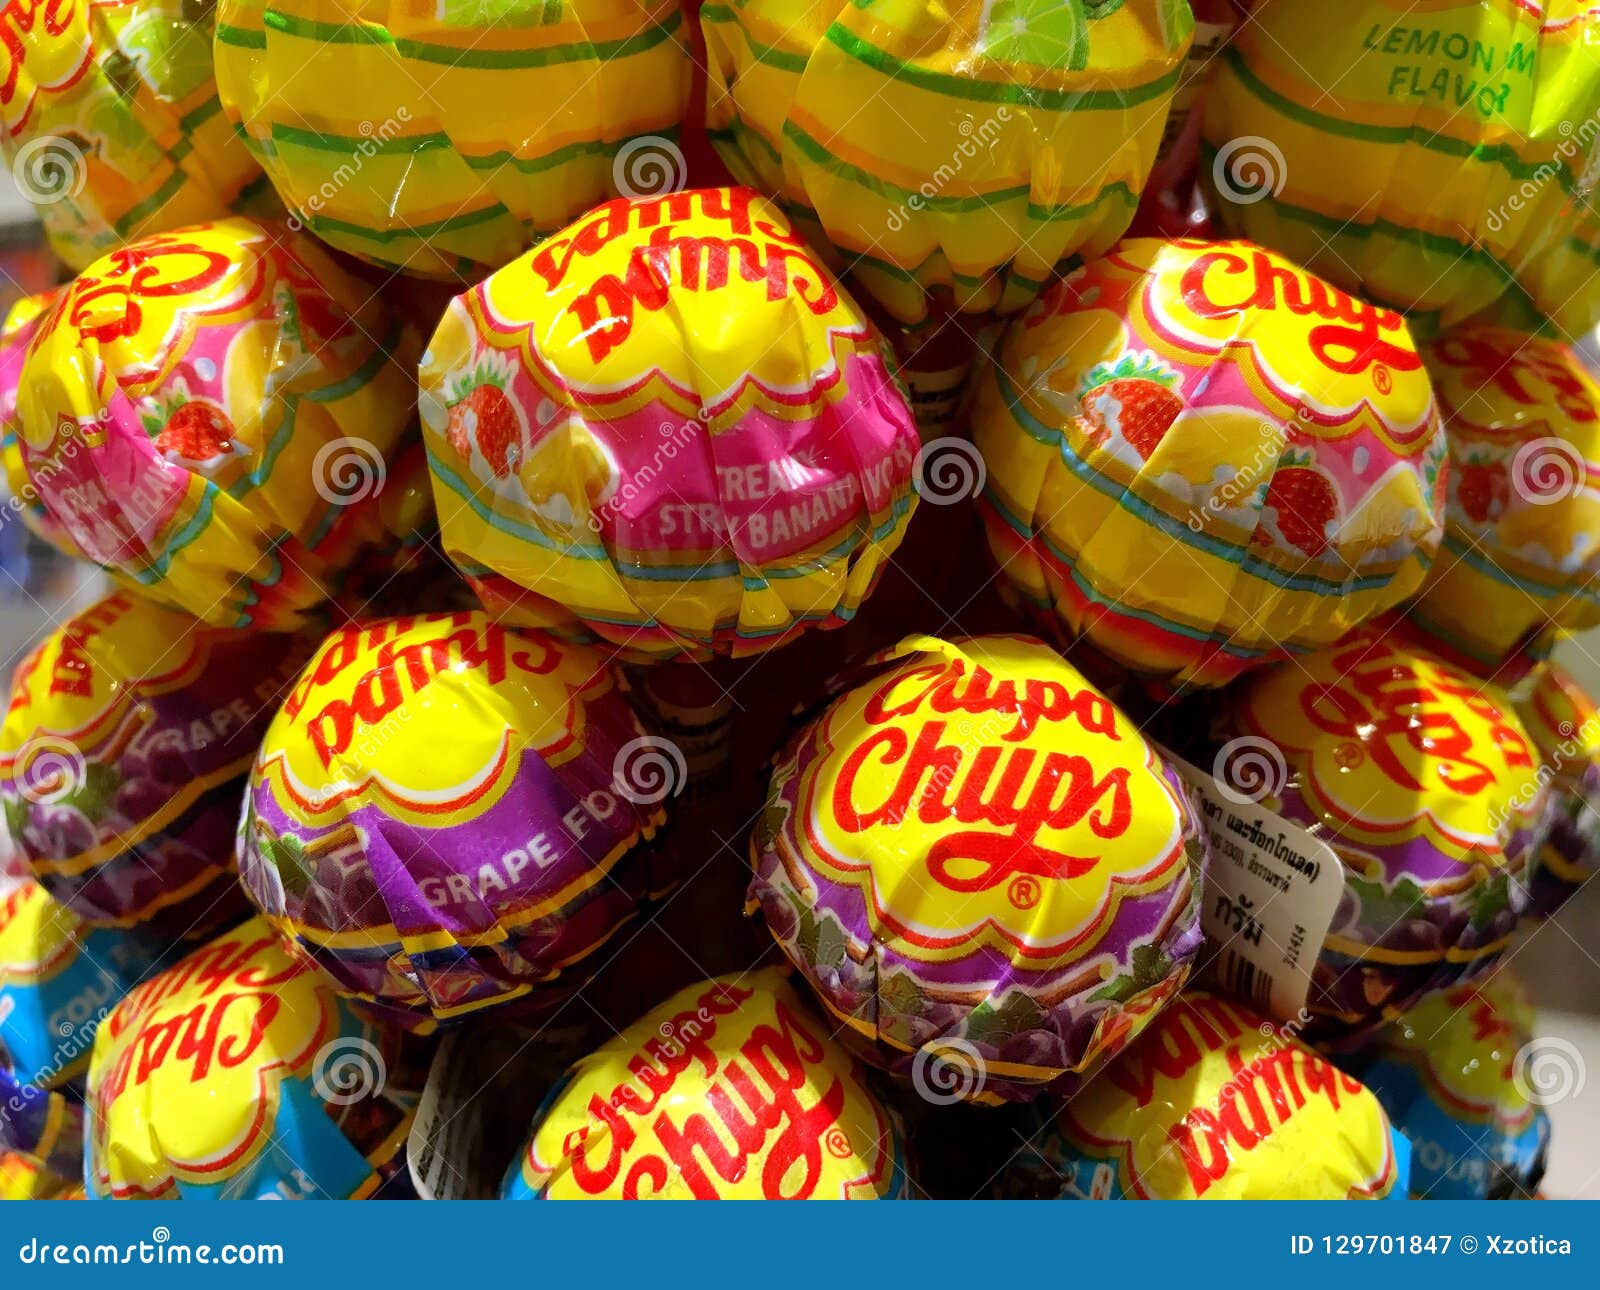 Lemon Yellow Chupa Chups Lollipops 